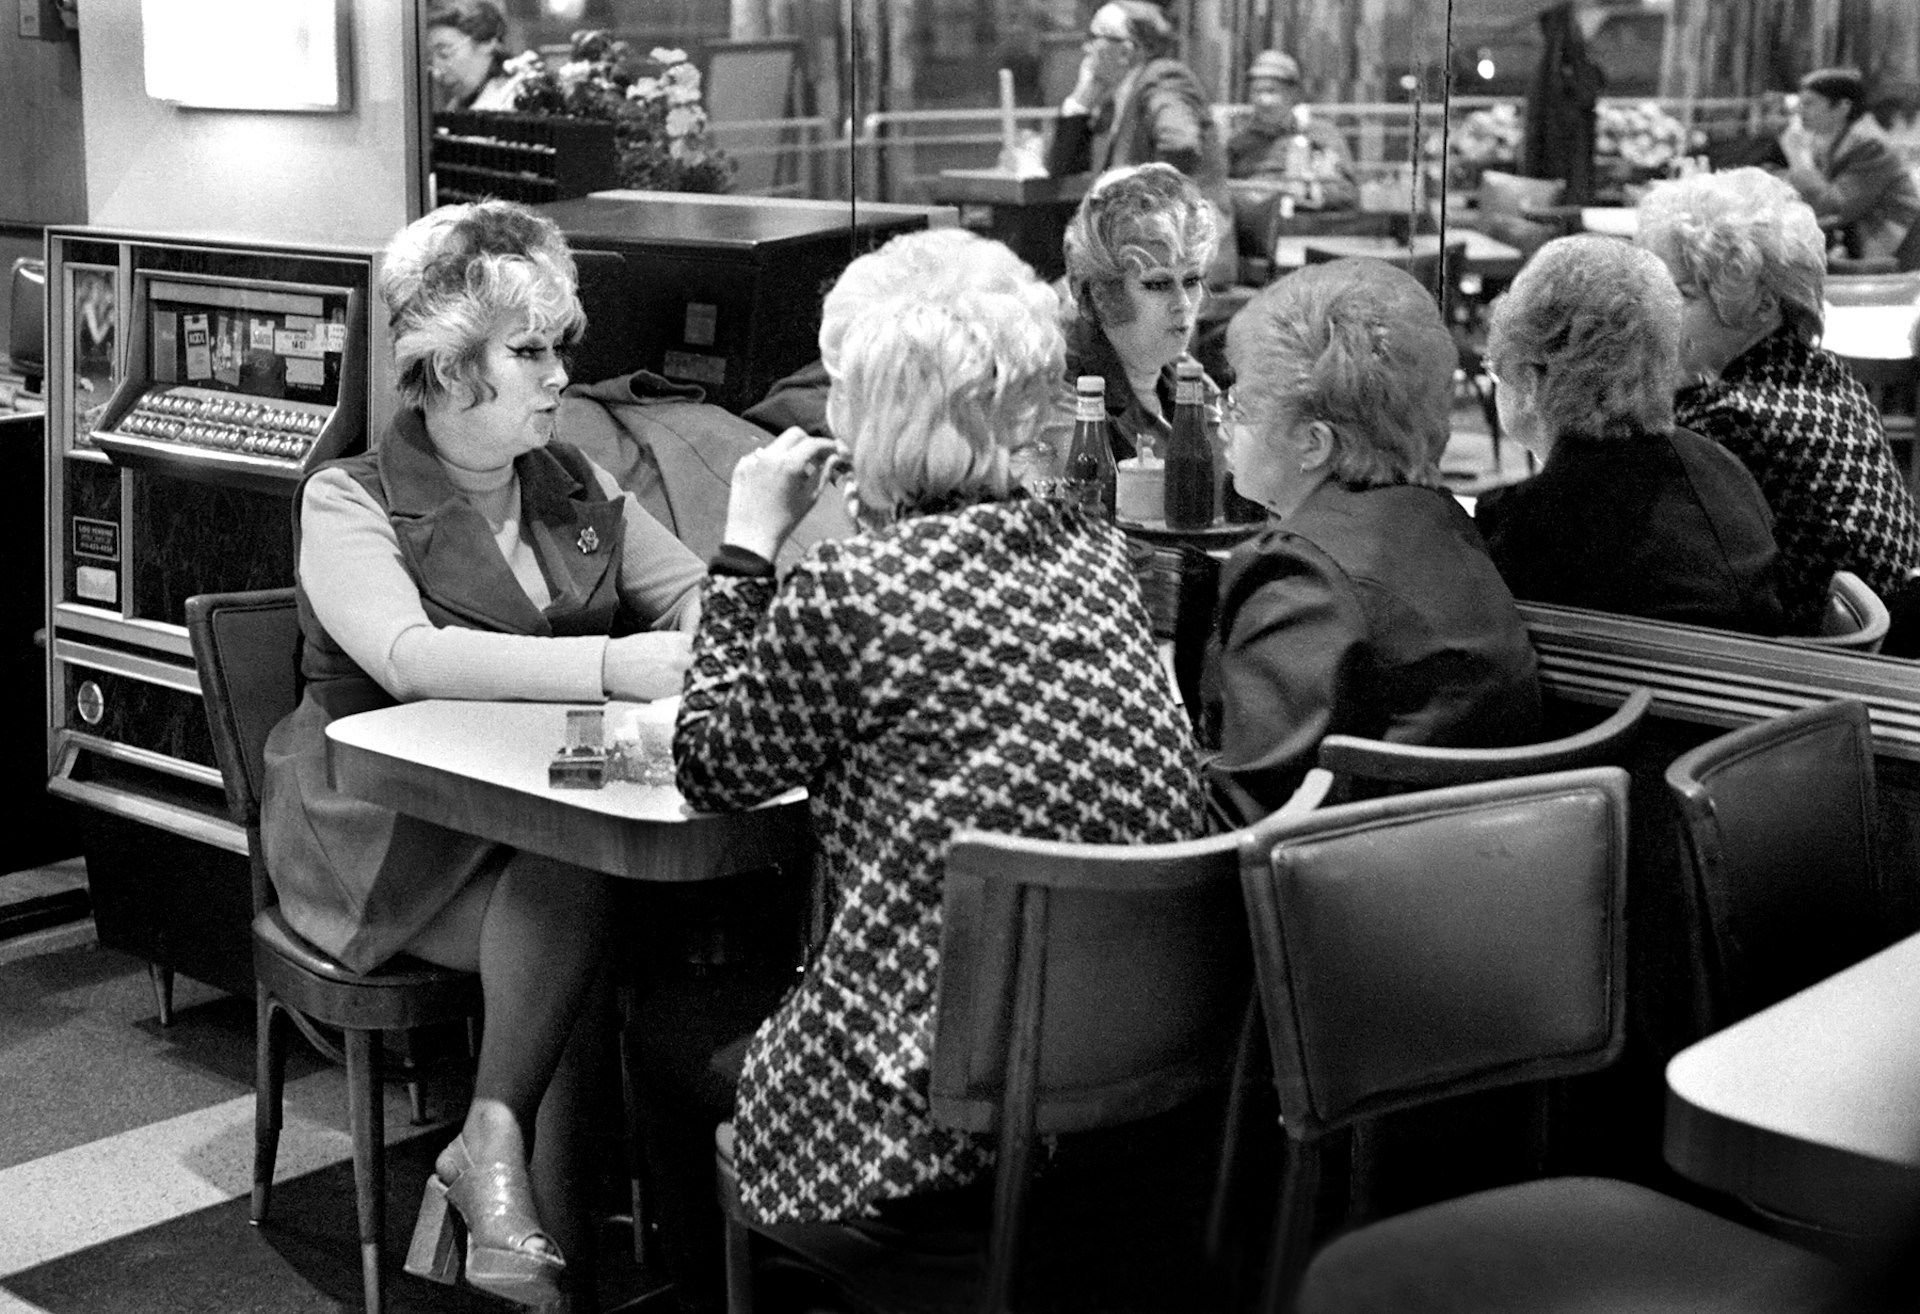 Nostalgic photos of New York City's café culture in the '70s